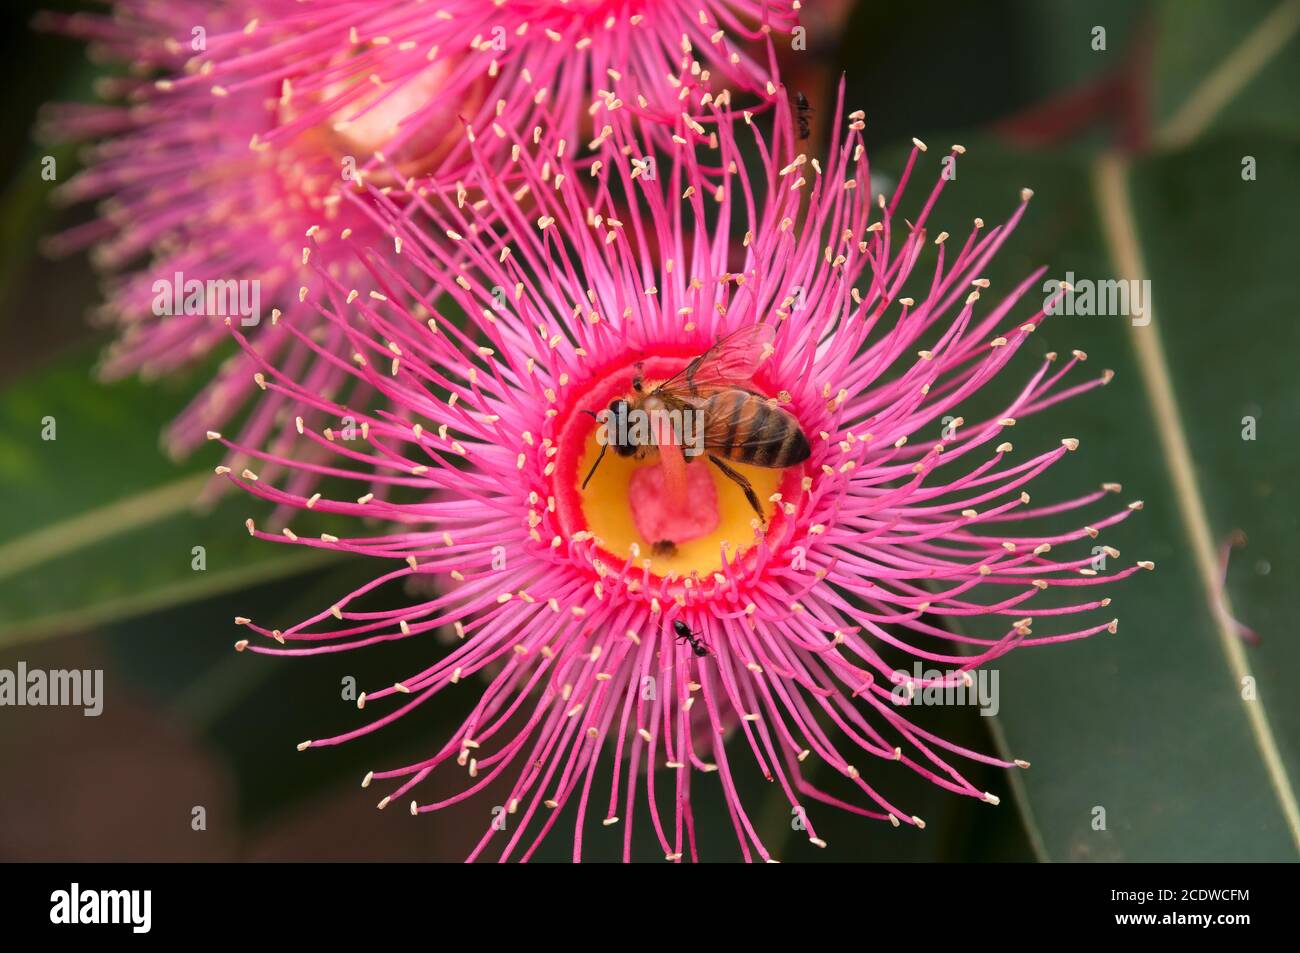 Sydney Australia, bee on pink flower of an Australian native flowering gum tree Stock Photo